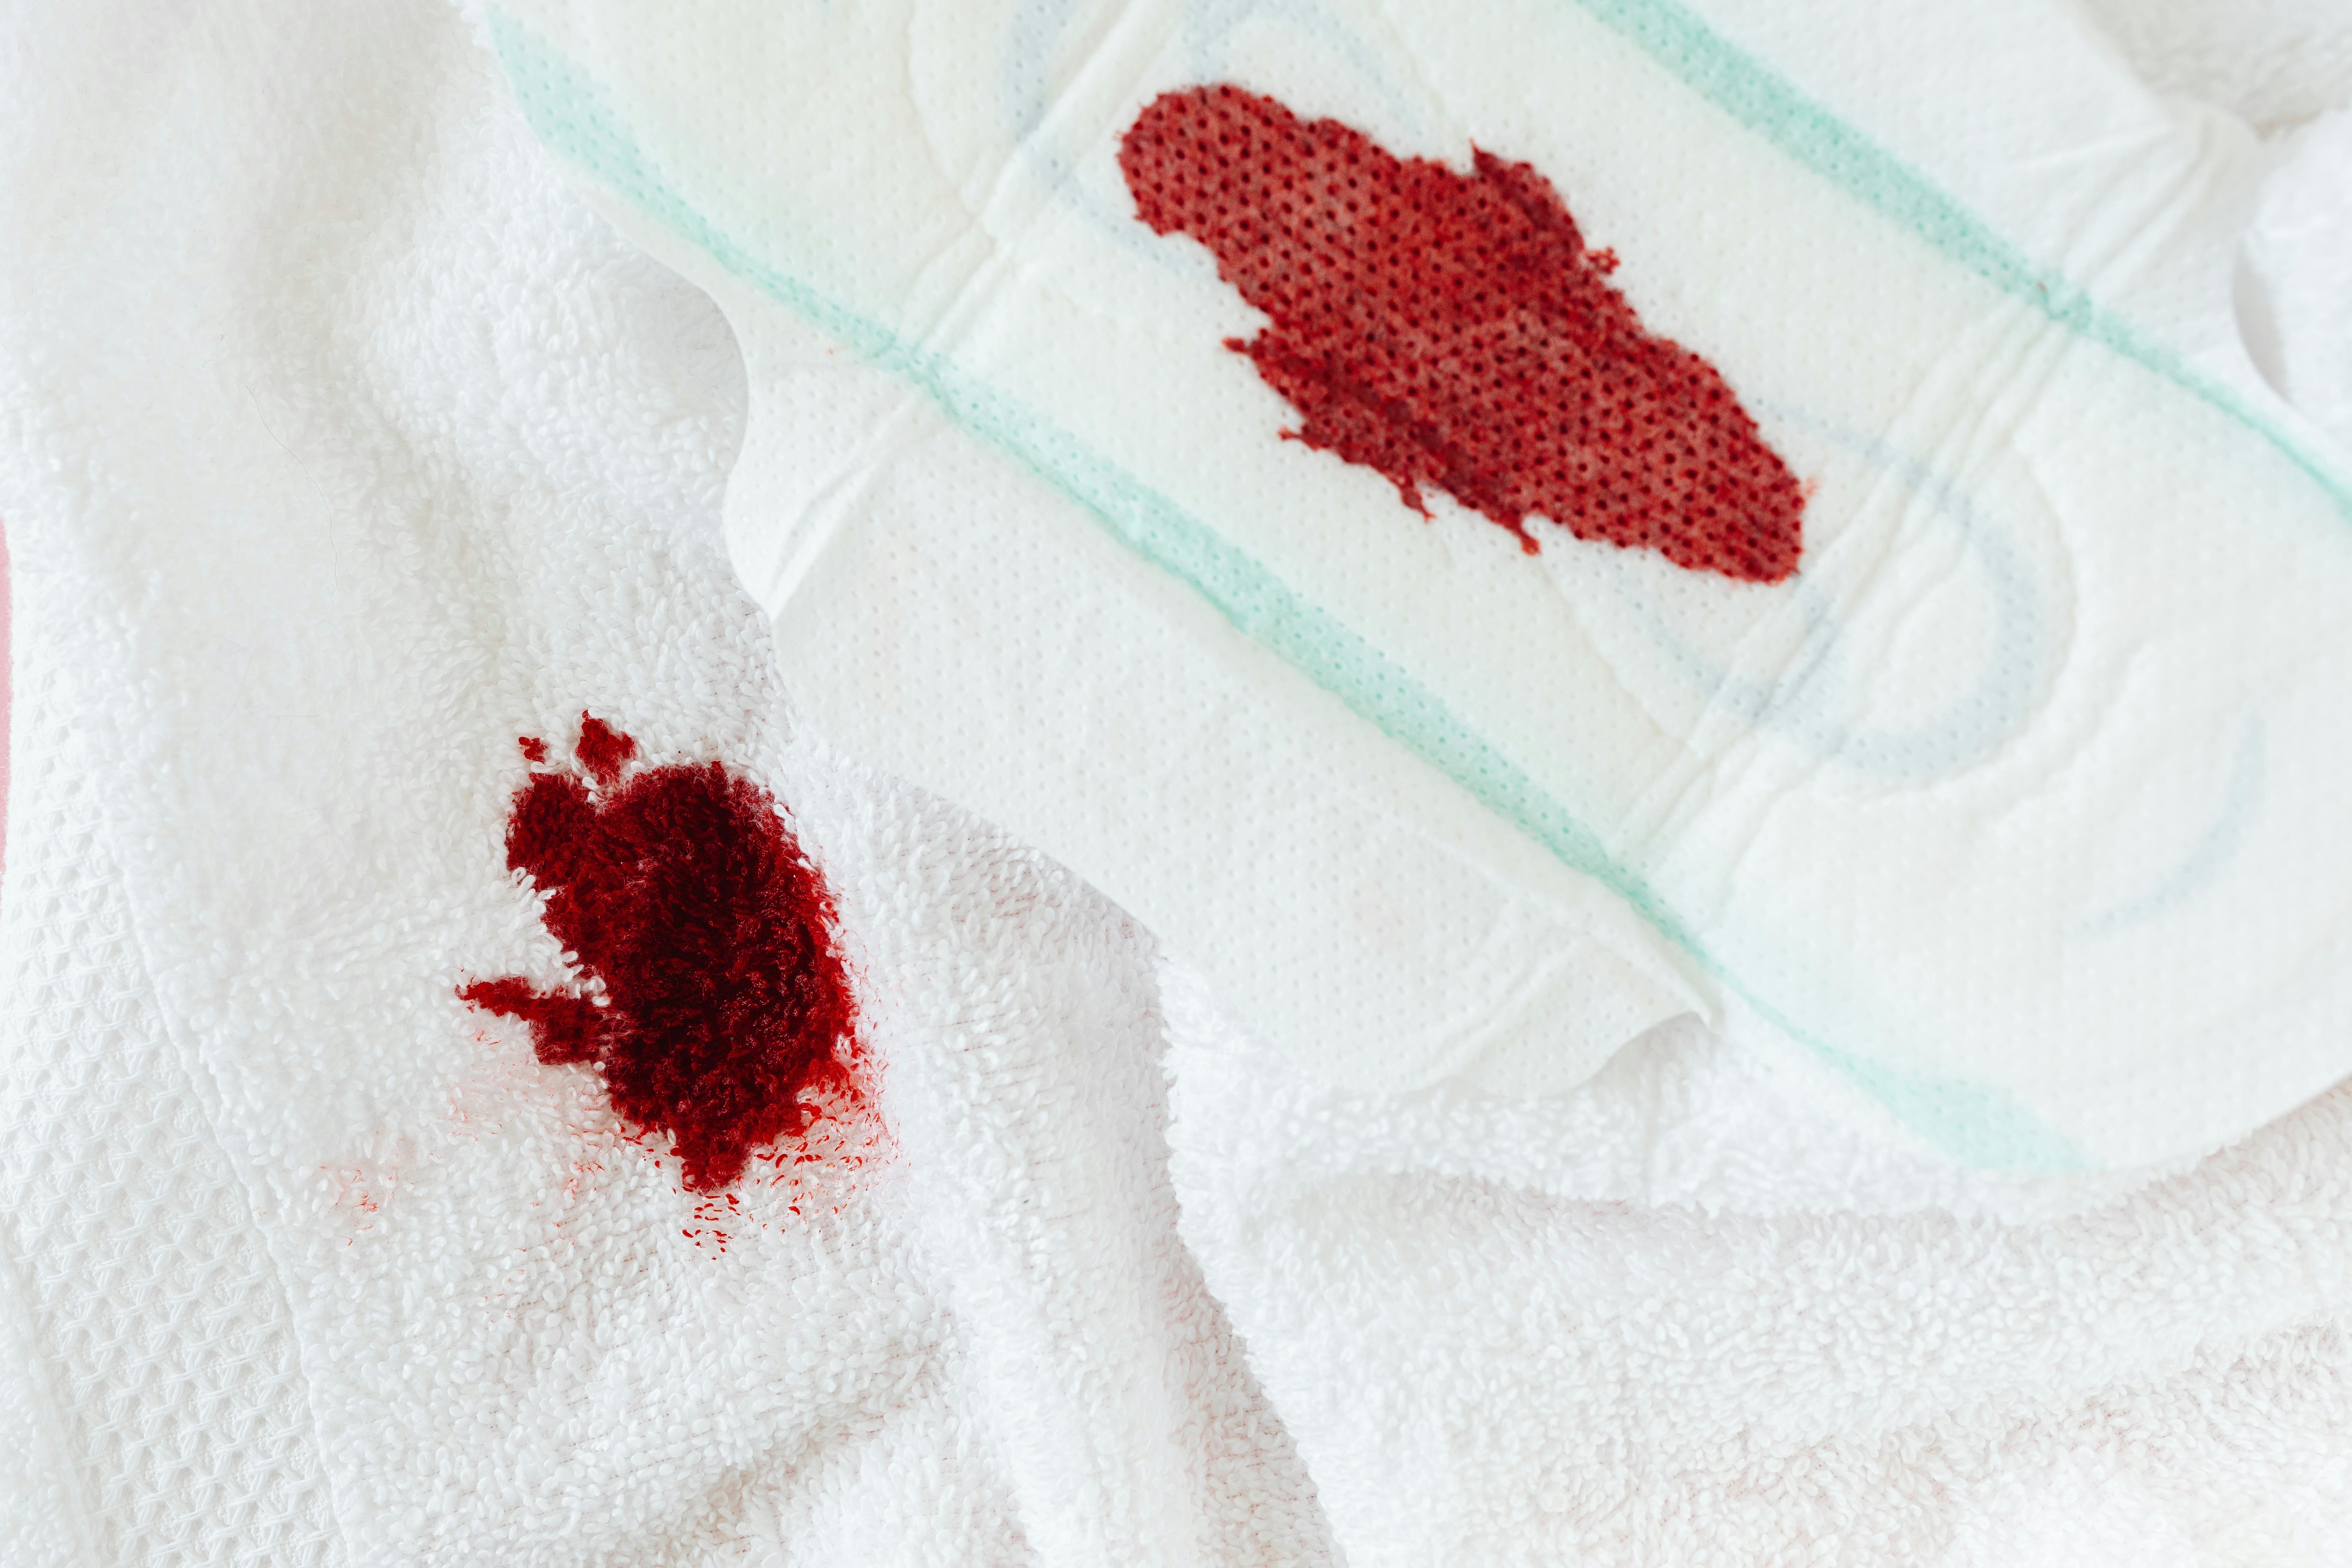 Blood on Sanitary Pad · Free Stock Photo